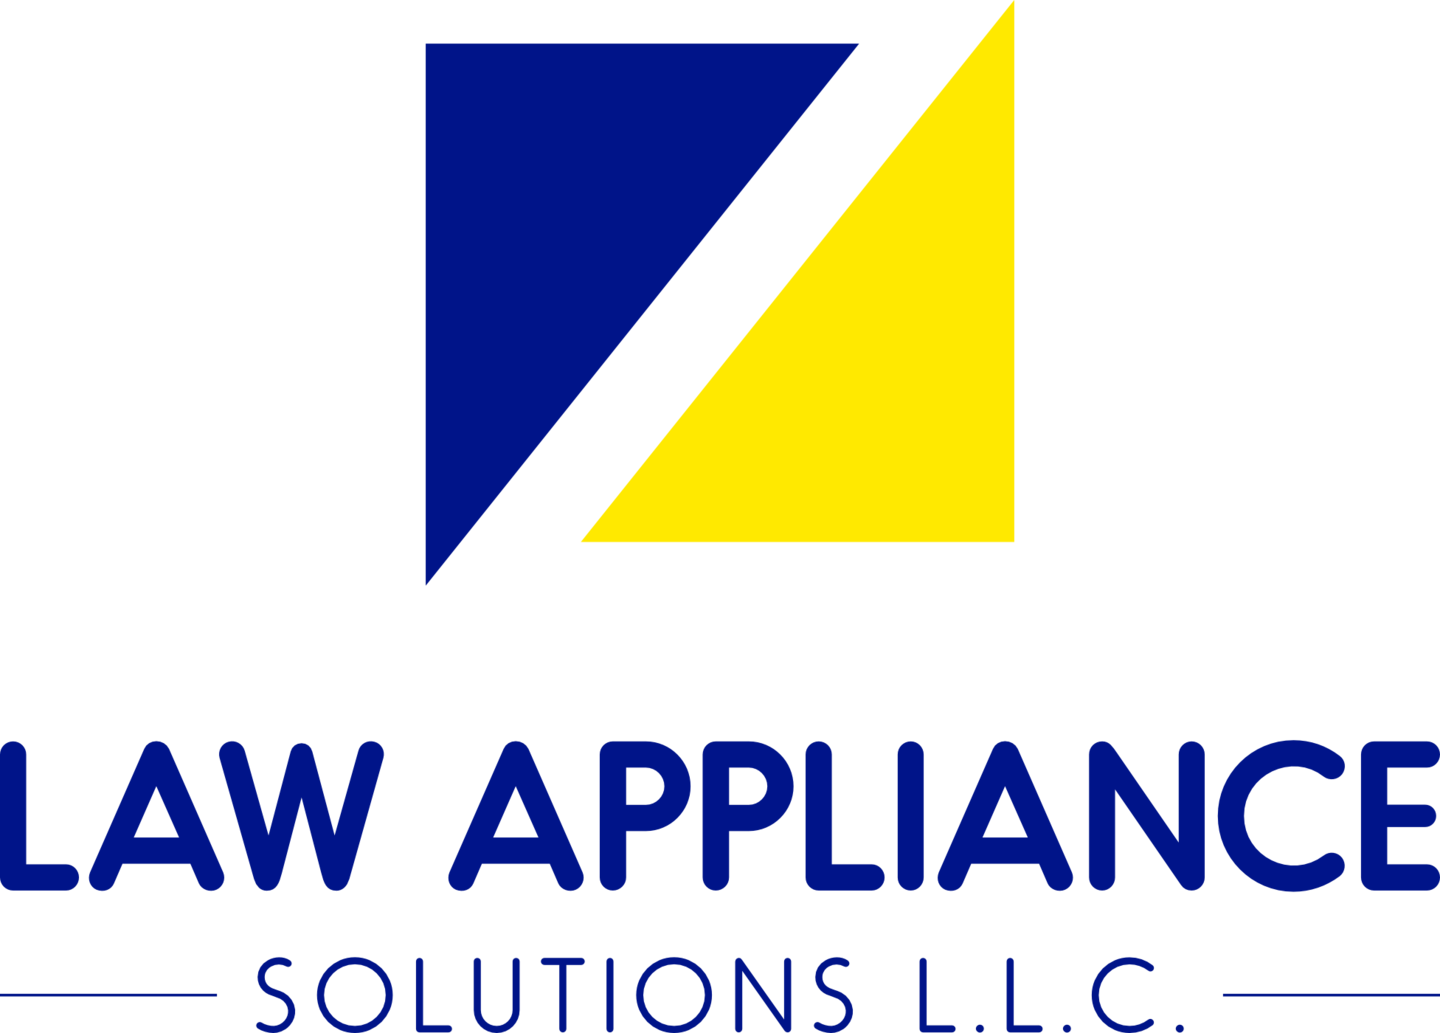 Profile Image of Pro Law Appliance Solutions L.L.C.